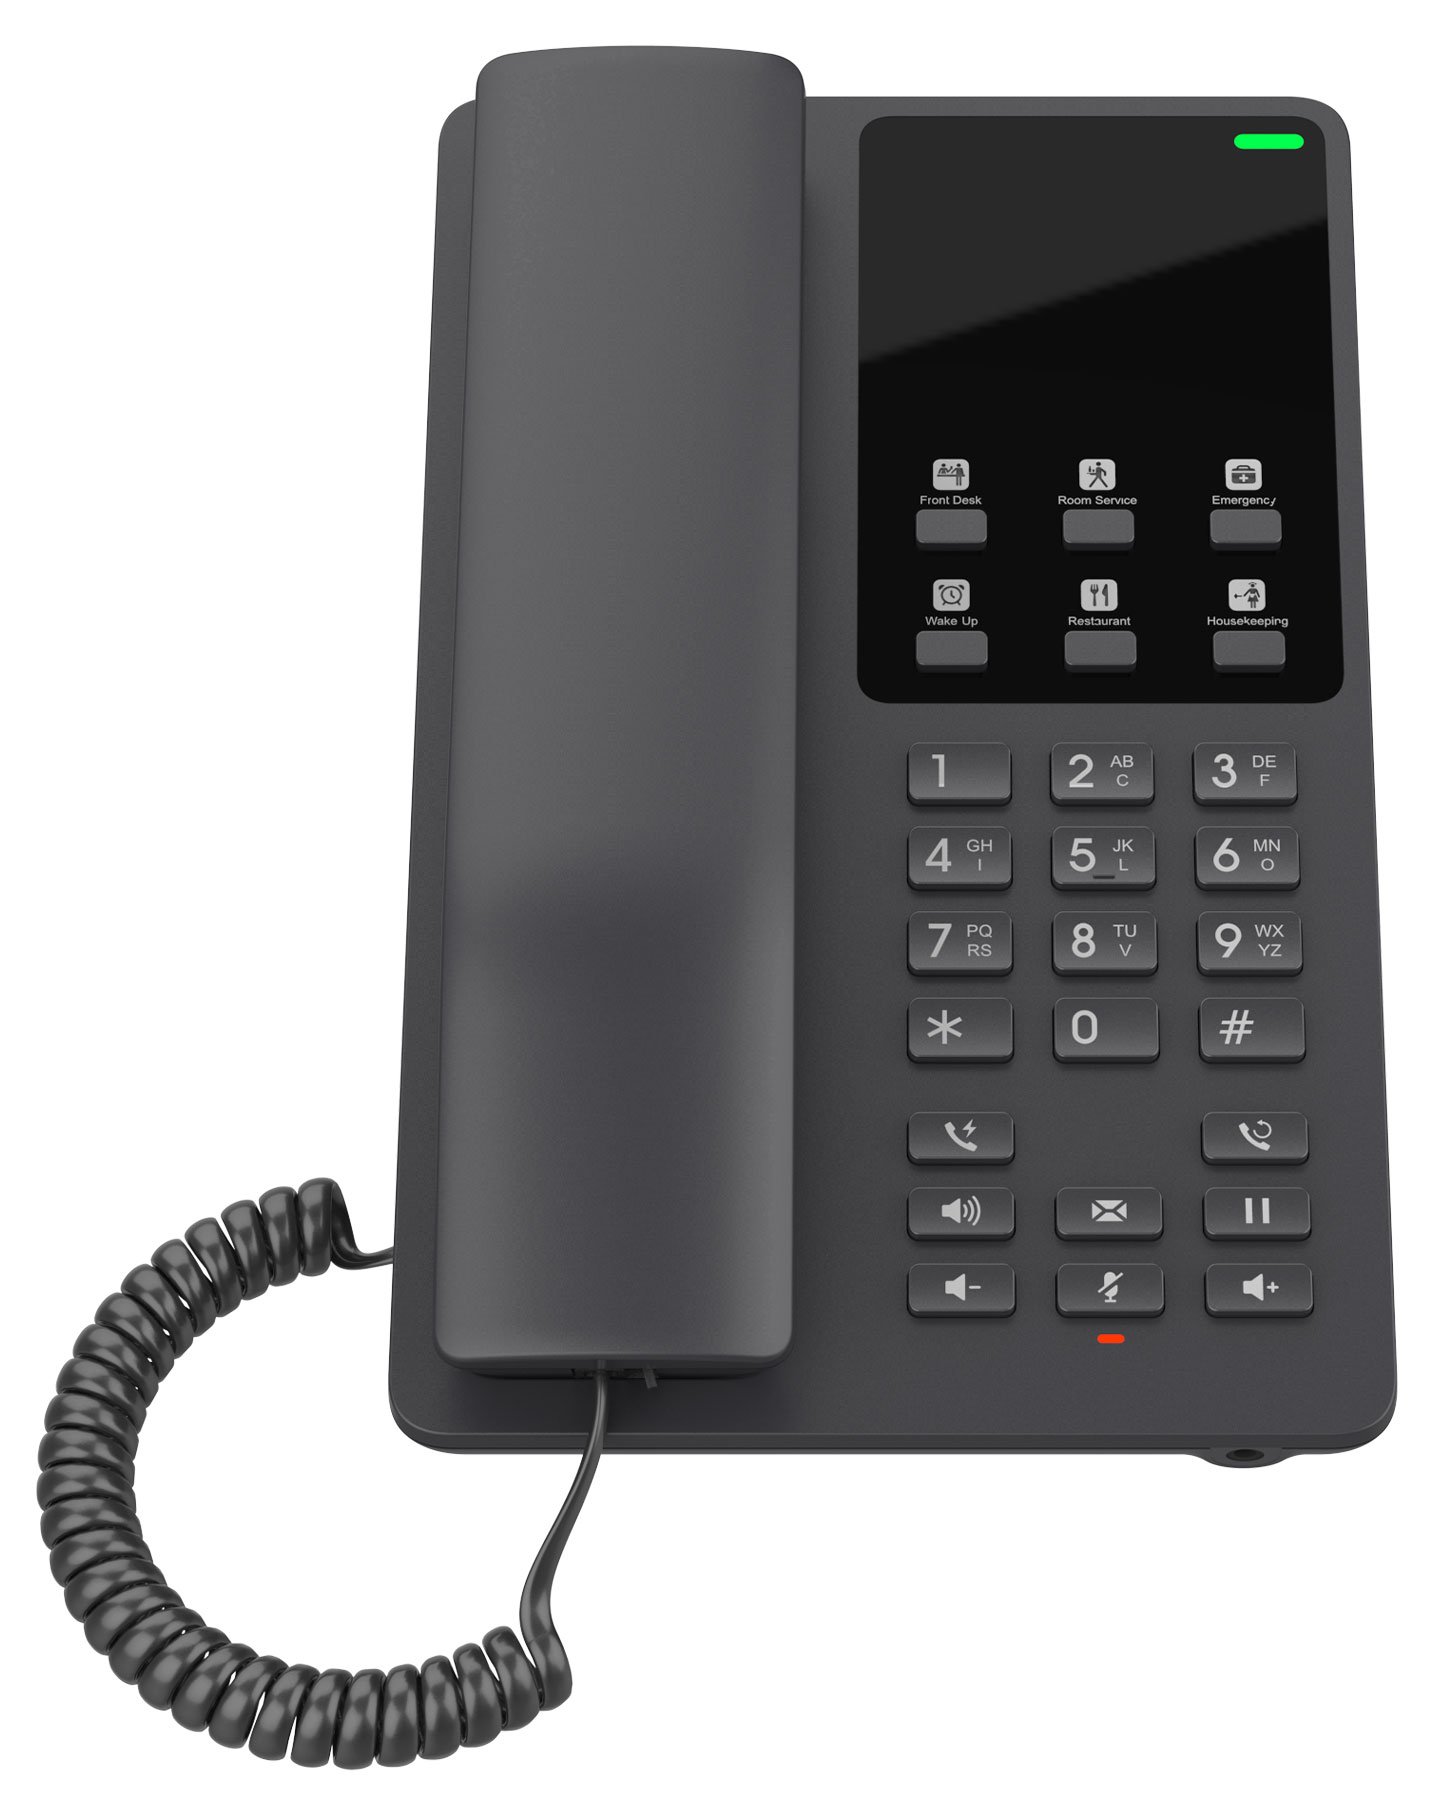 Grandstream GHP621 Compact Hotel Phone